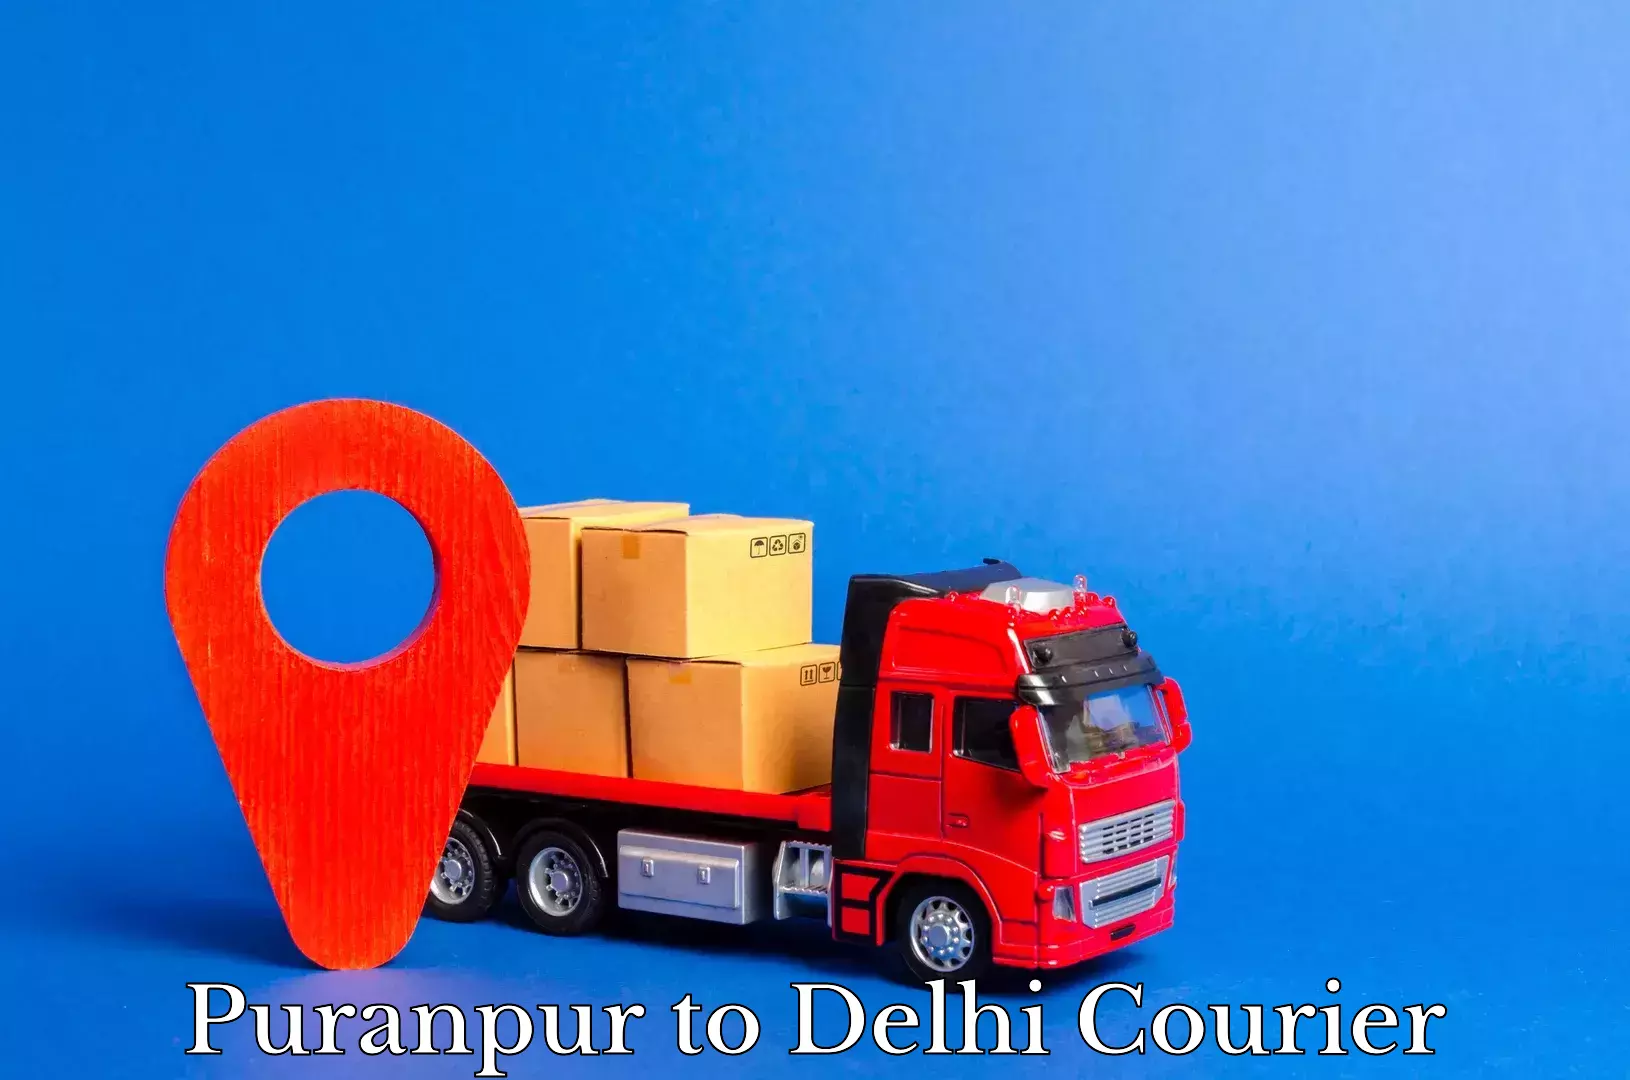 High-speed parcel service Puranpur to Delhi